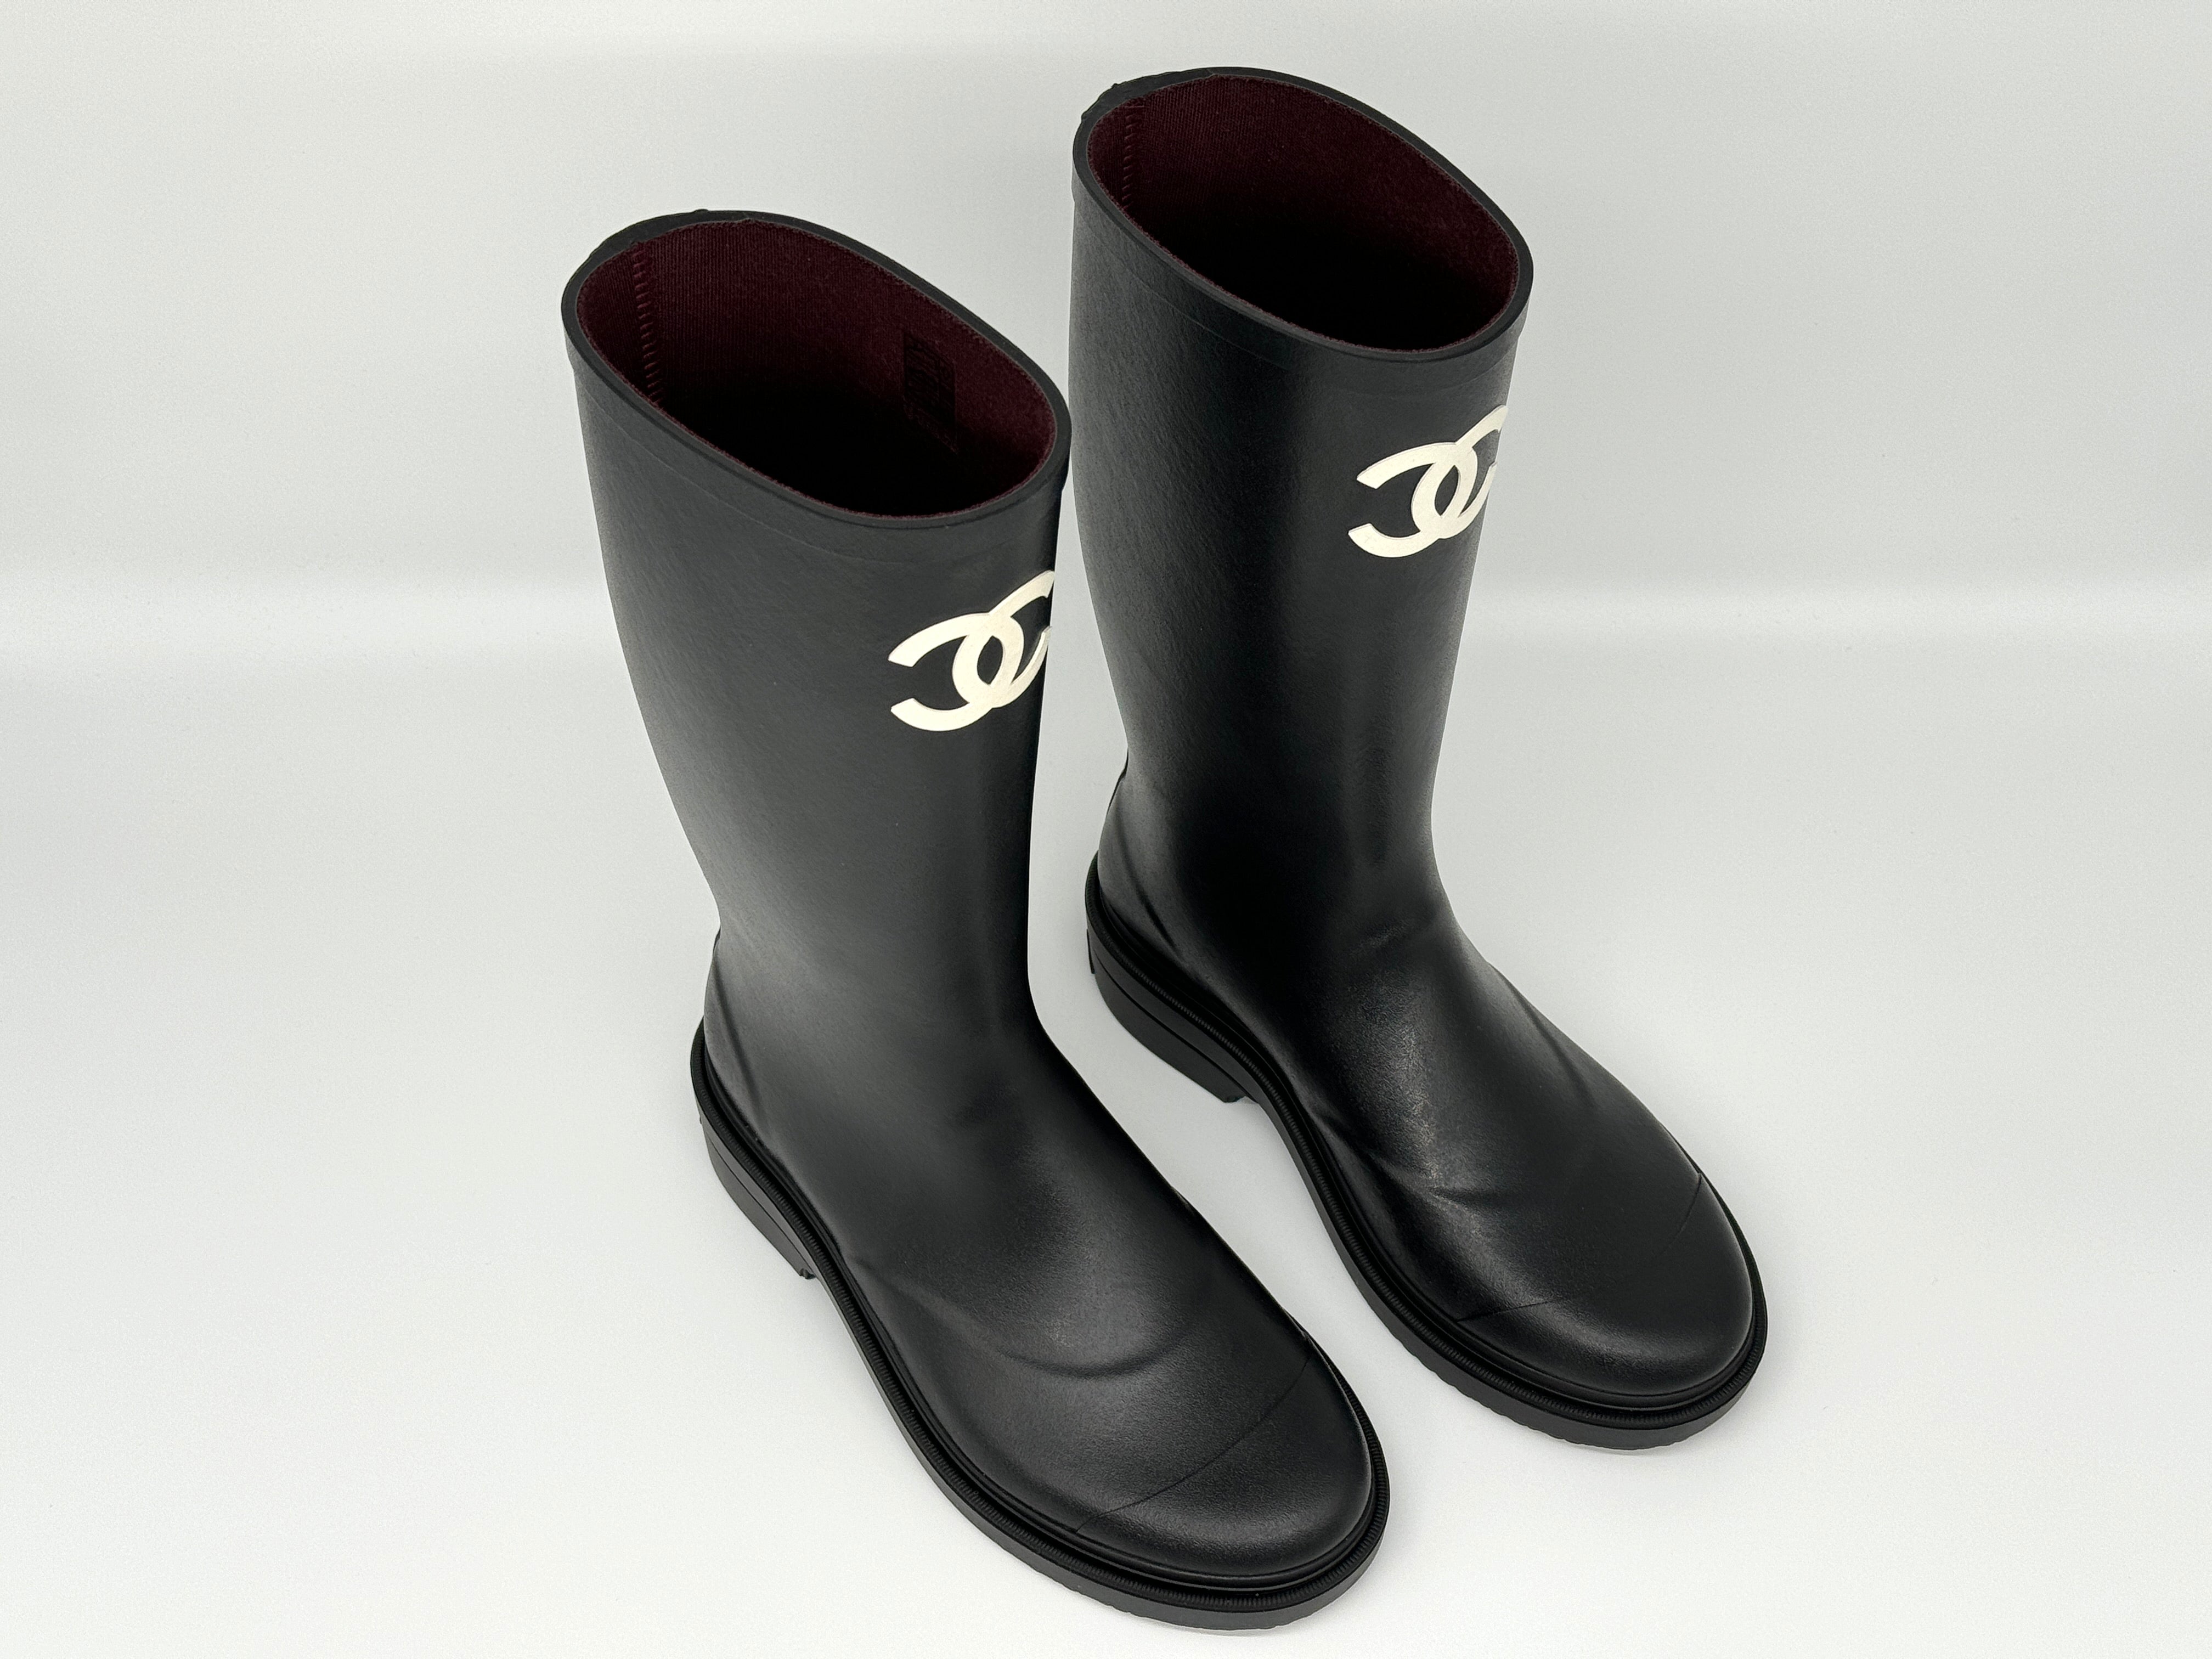 Chanel Rubber Rain Boots